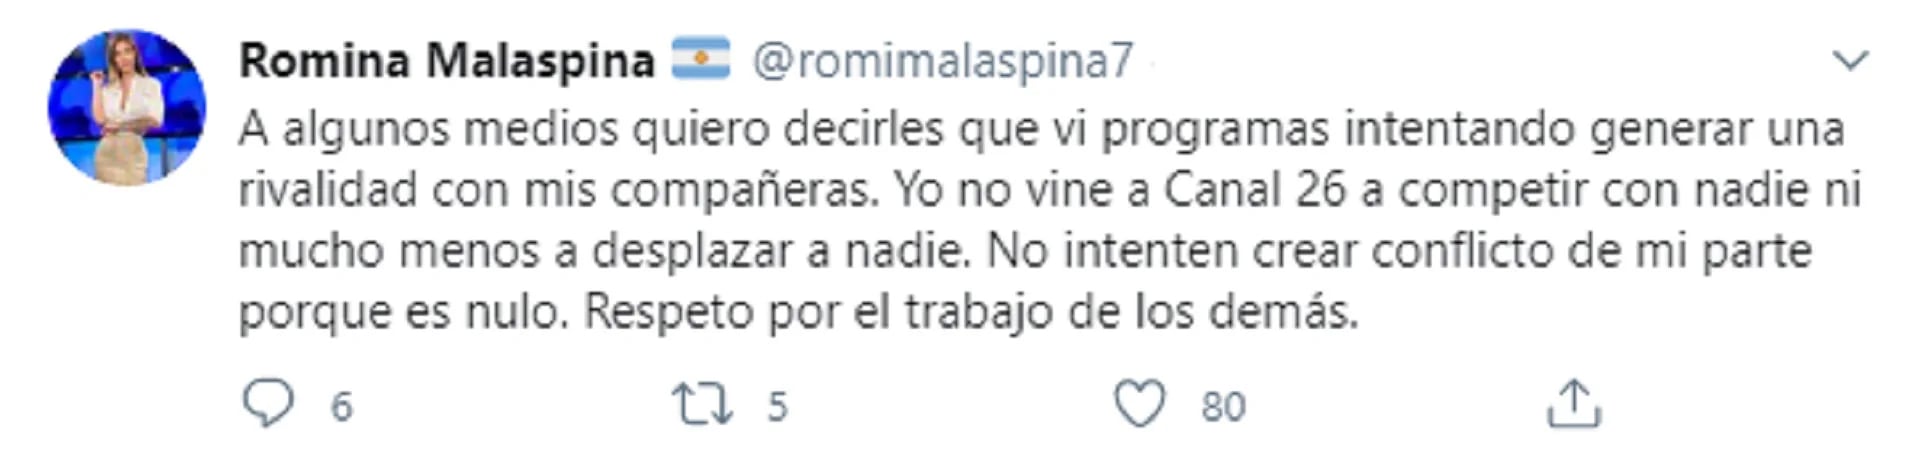 El tuit de Romina Malaespina